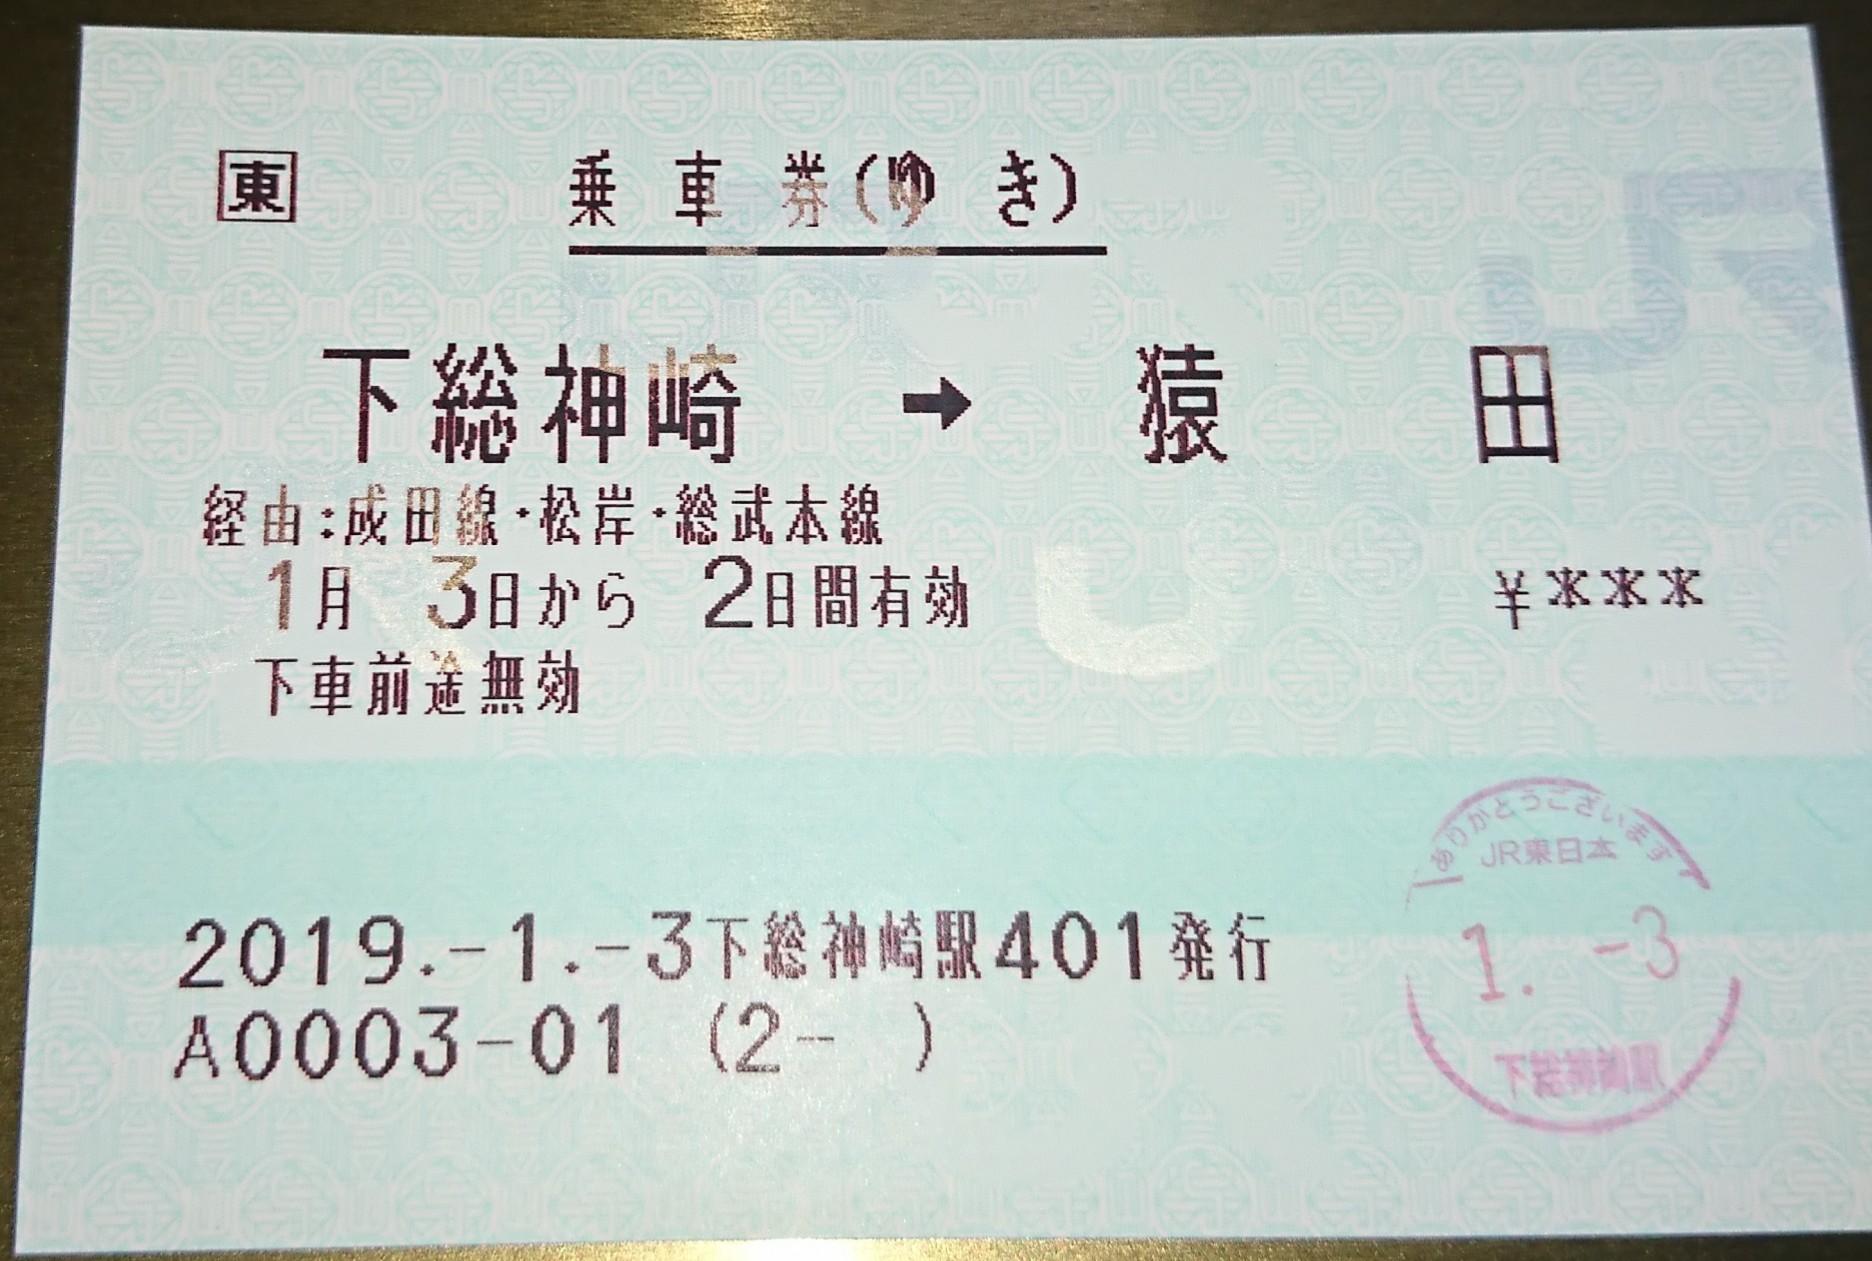 2. JR東日本のPOS端末券 - 10, POS端末券等 - マルス券の接続駅の磁気符号